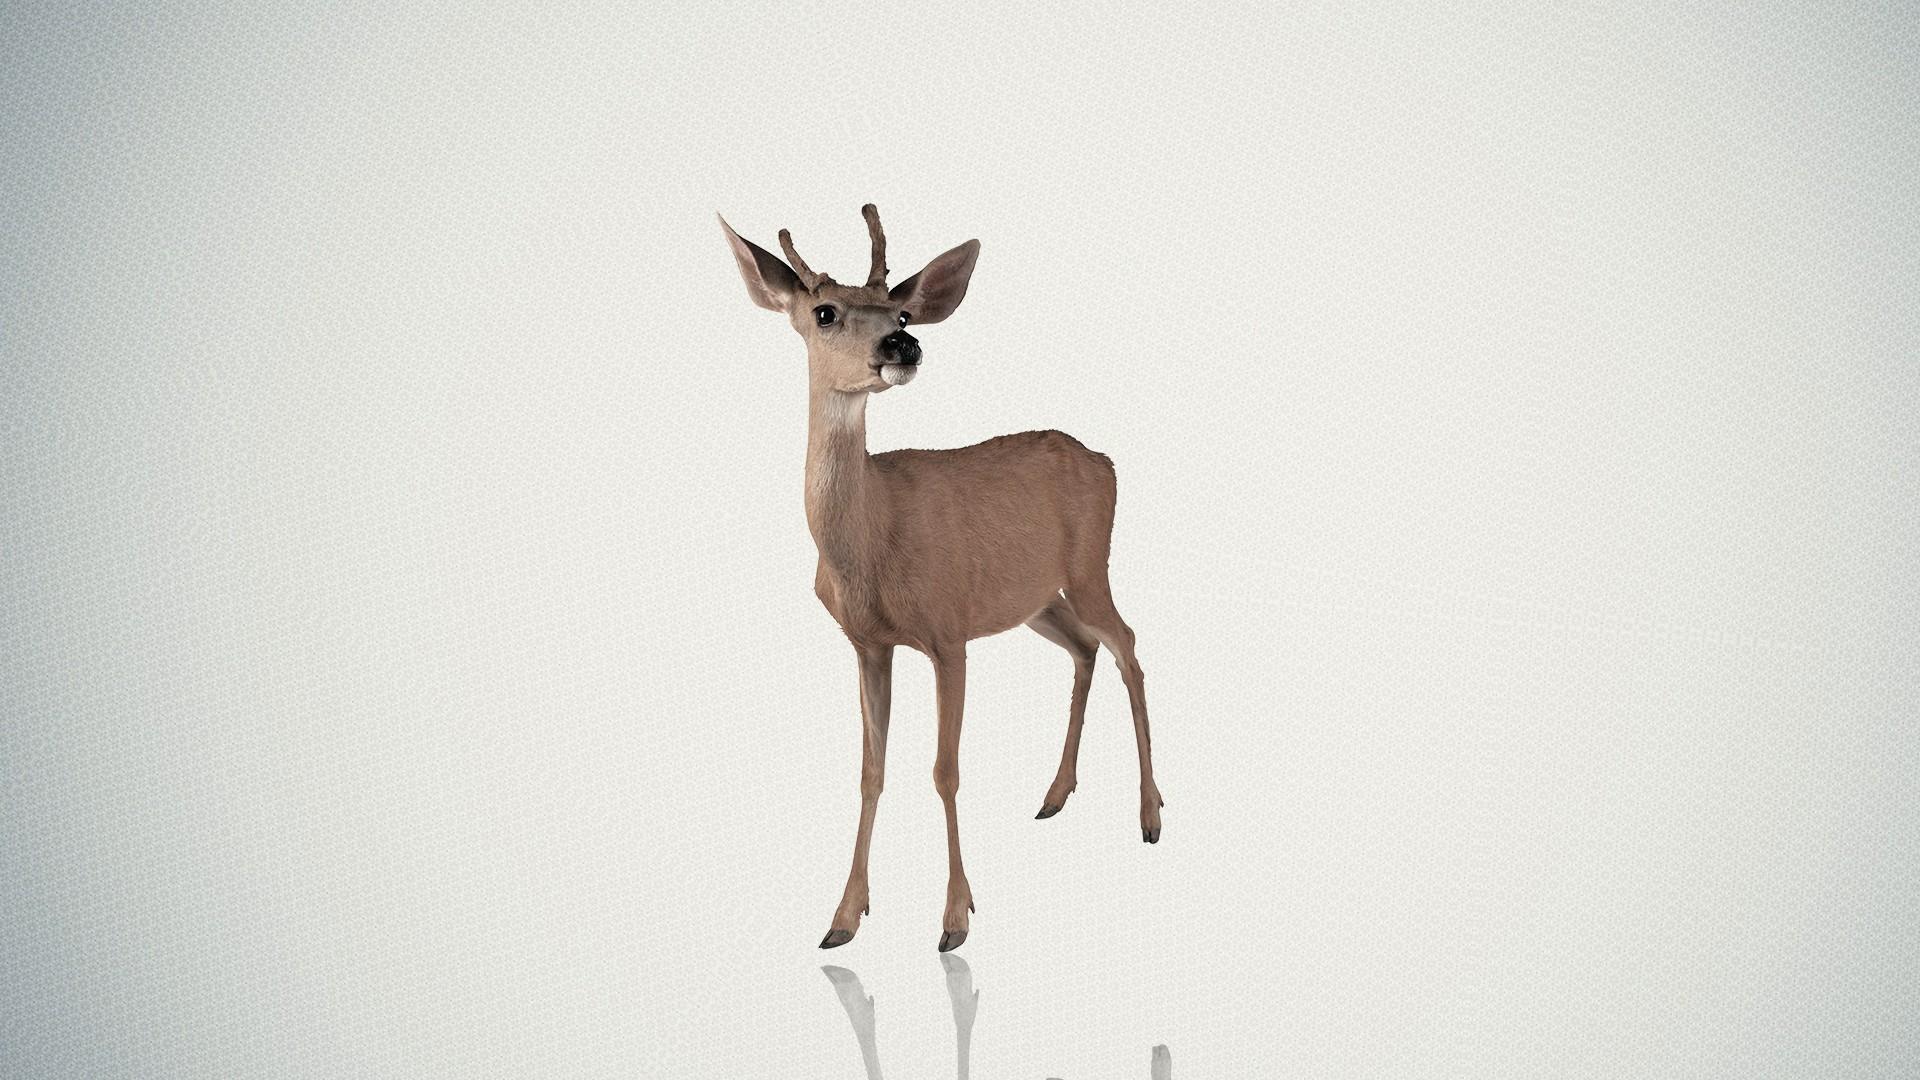 Deer Wallpapers 2K Backgrounds, Wallpaper, Pics, Photos Free Download